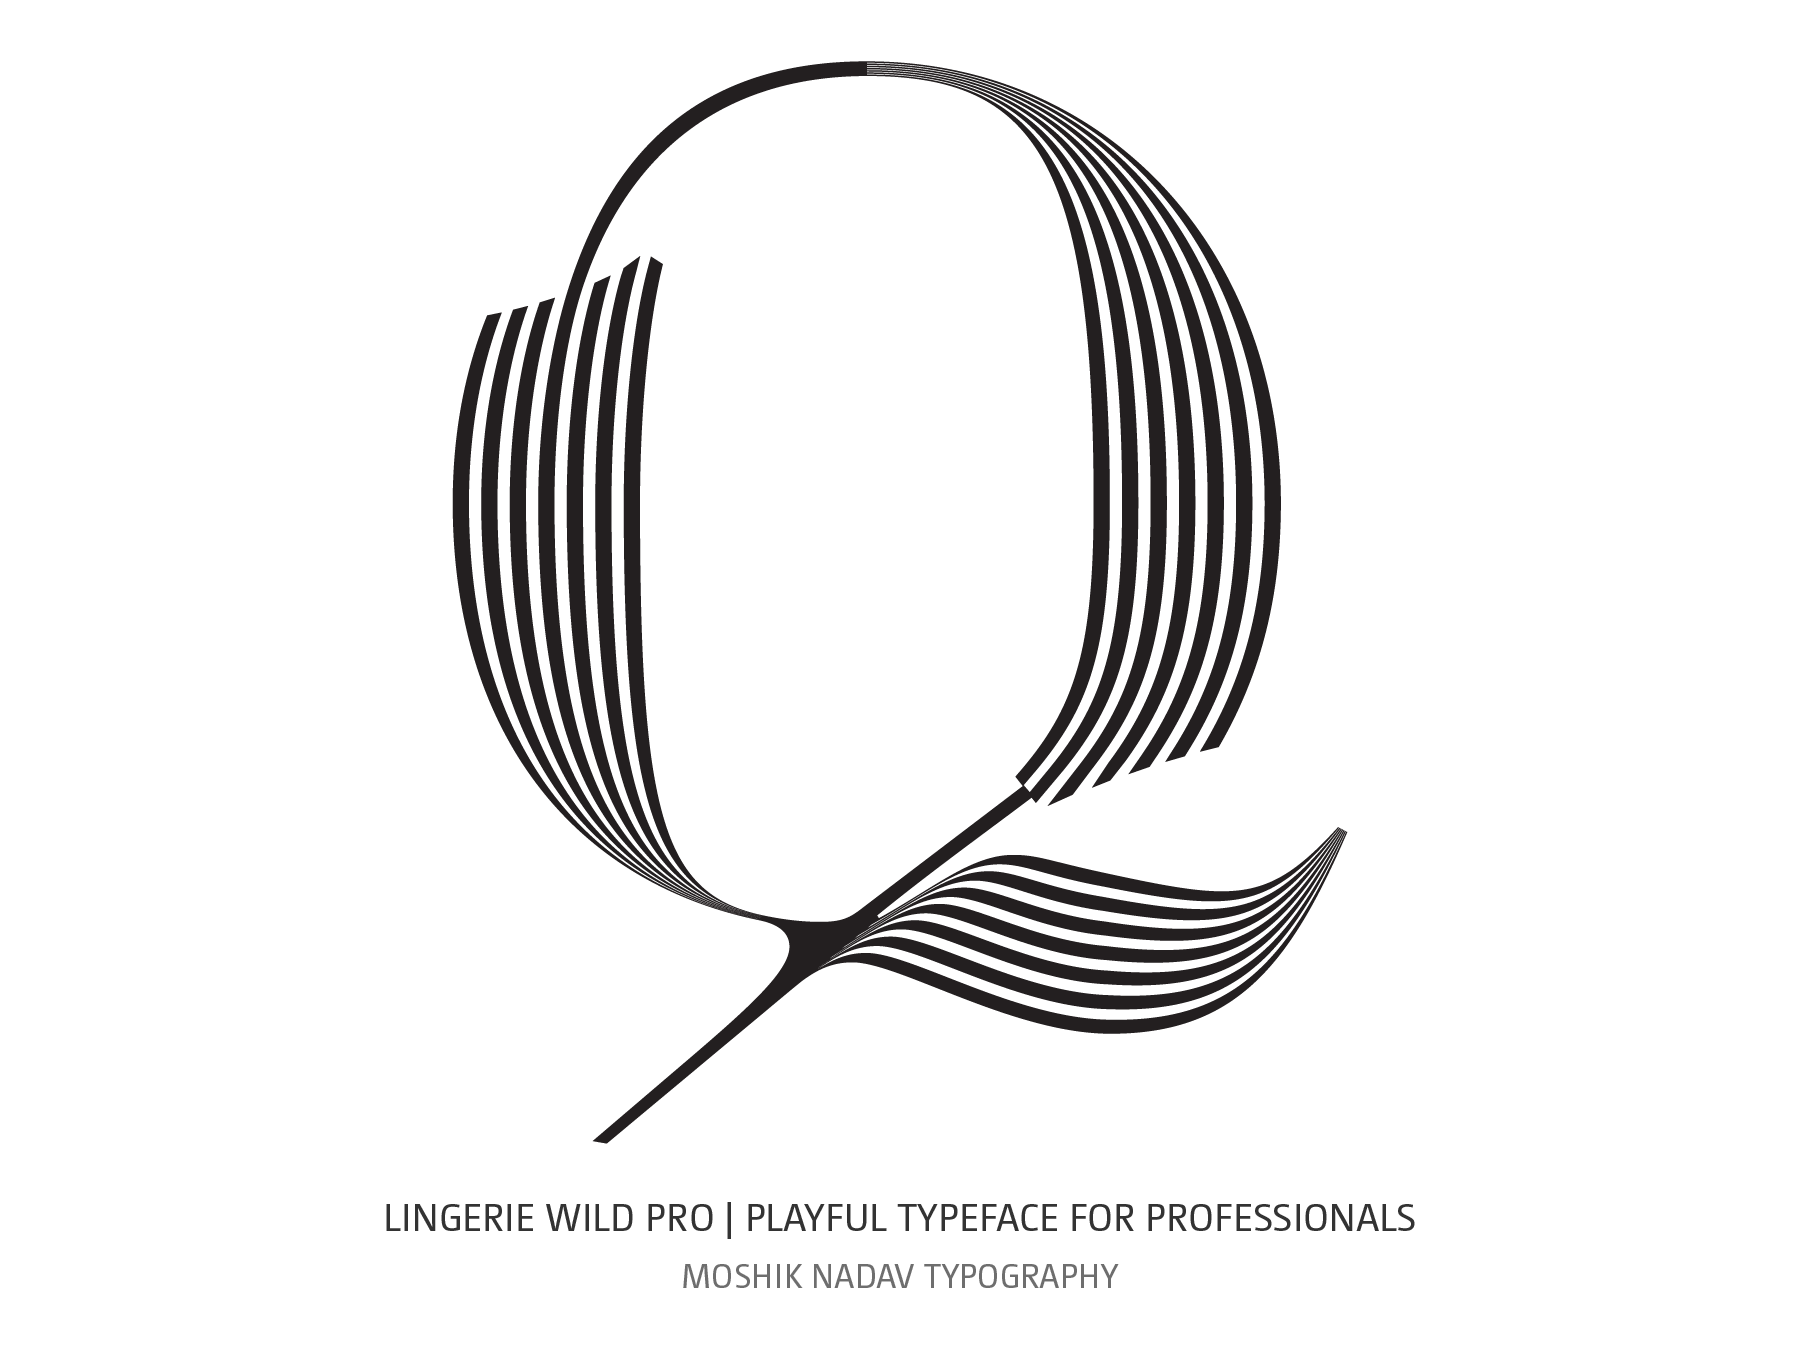 Lingerie Wild Pro Typeface Beautiful font for fashion logos